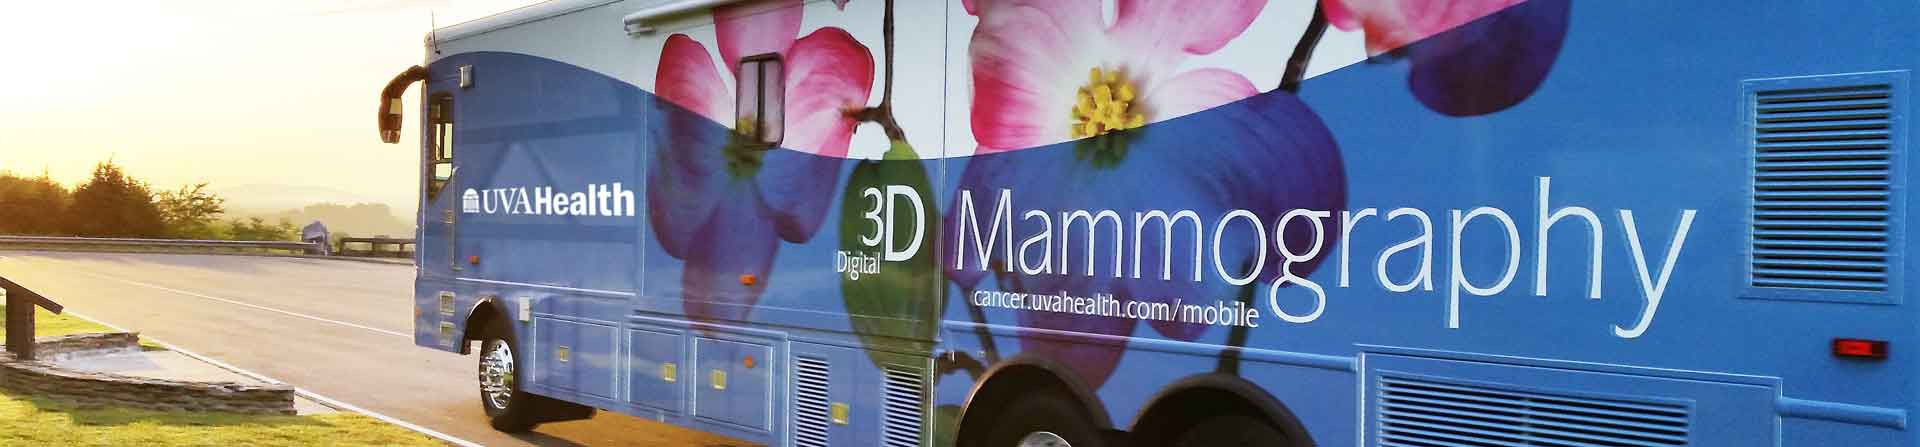 UVA Health Mobile Mammography Van